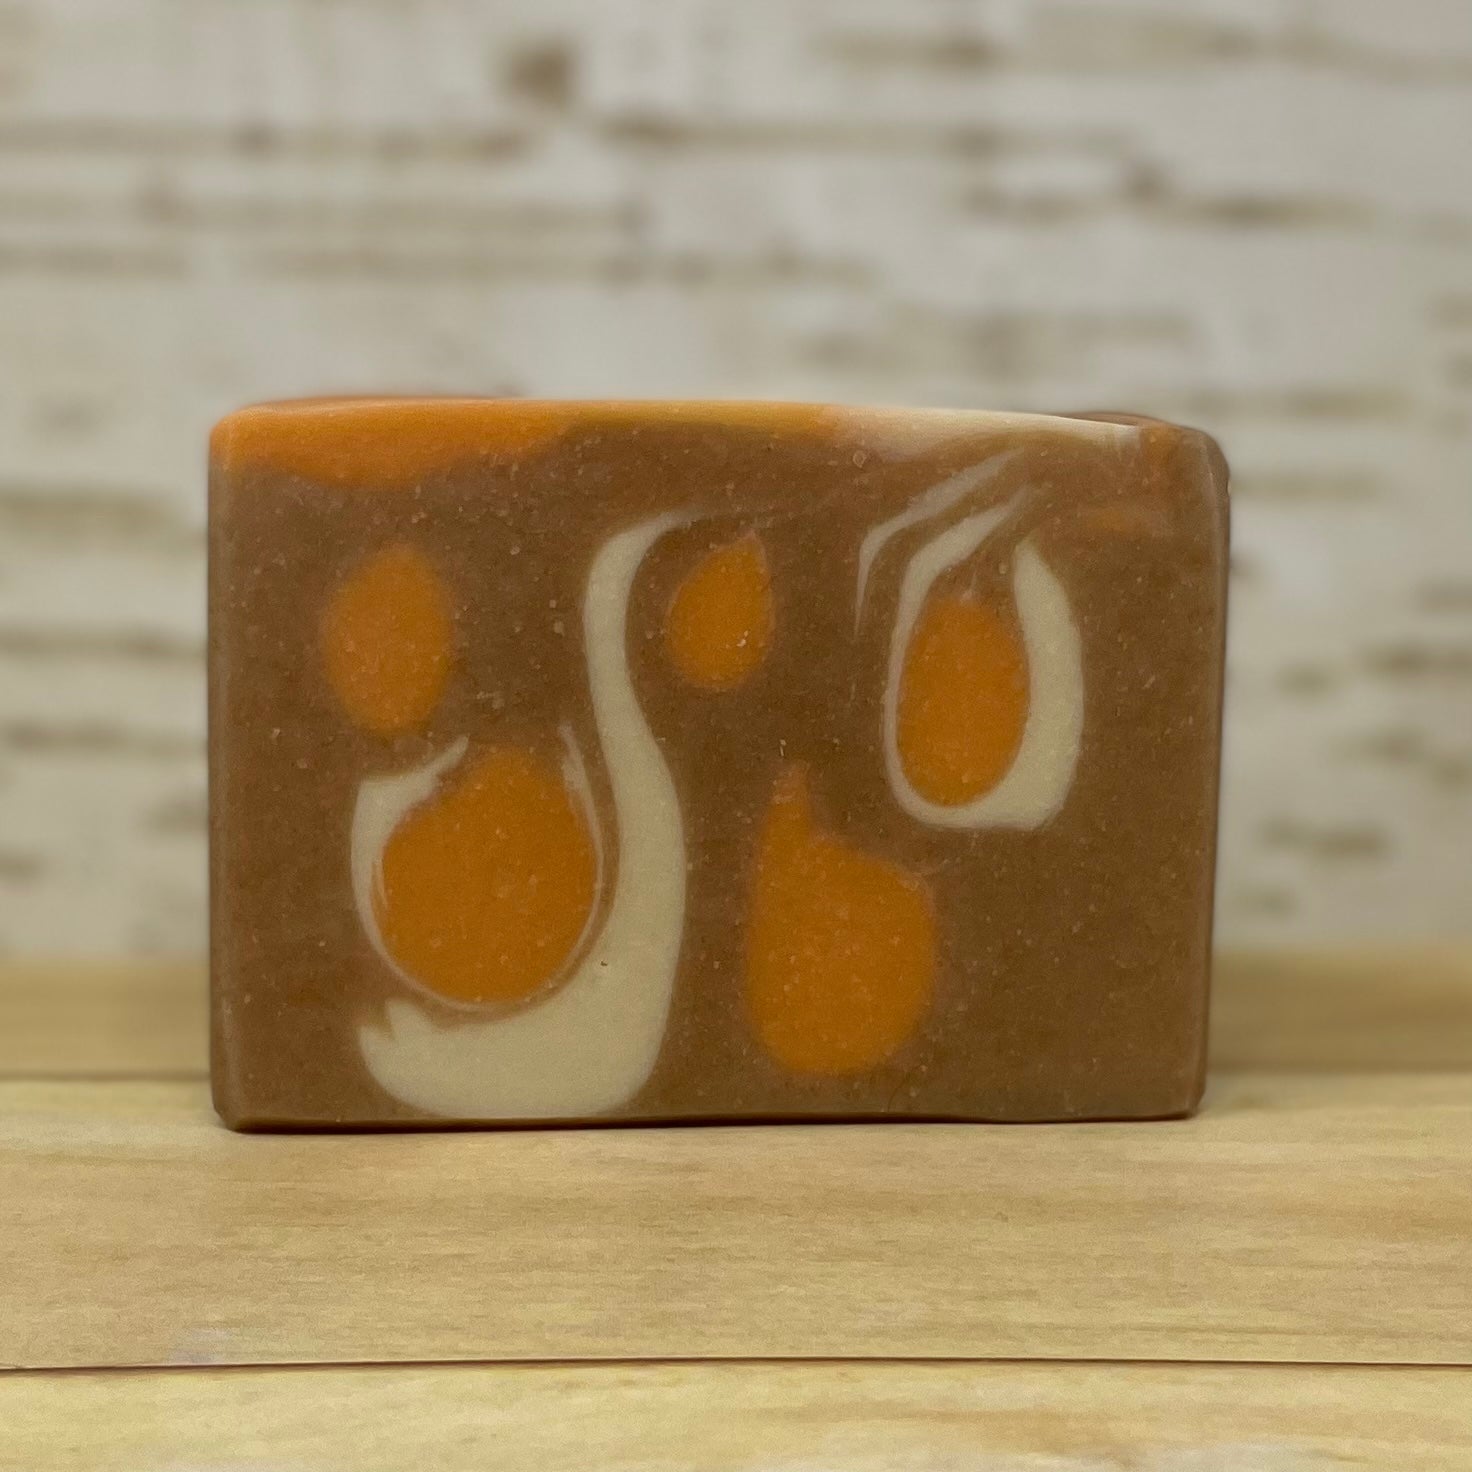 Pumpkin Spiced Latte soap